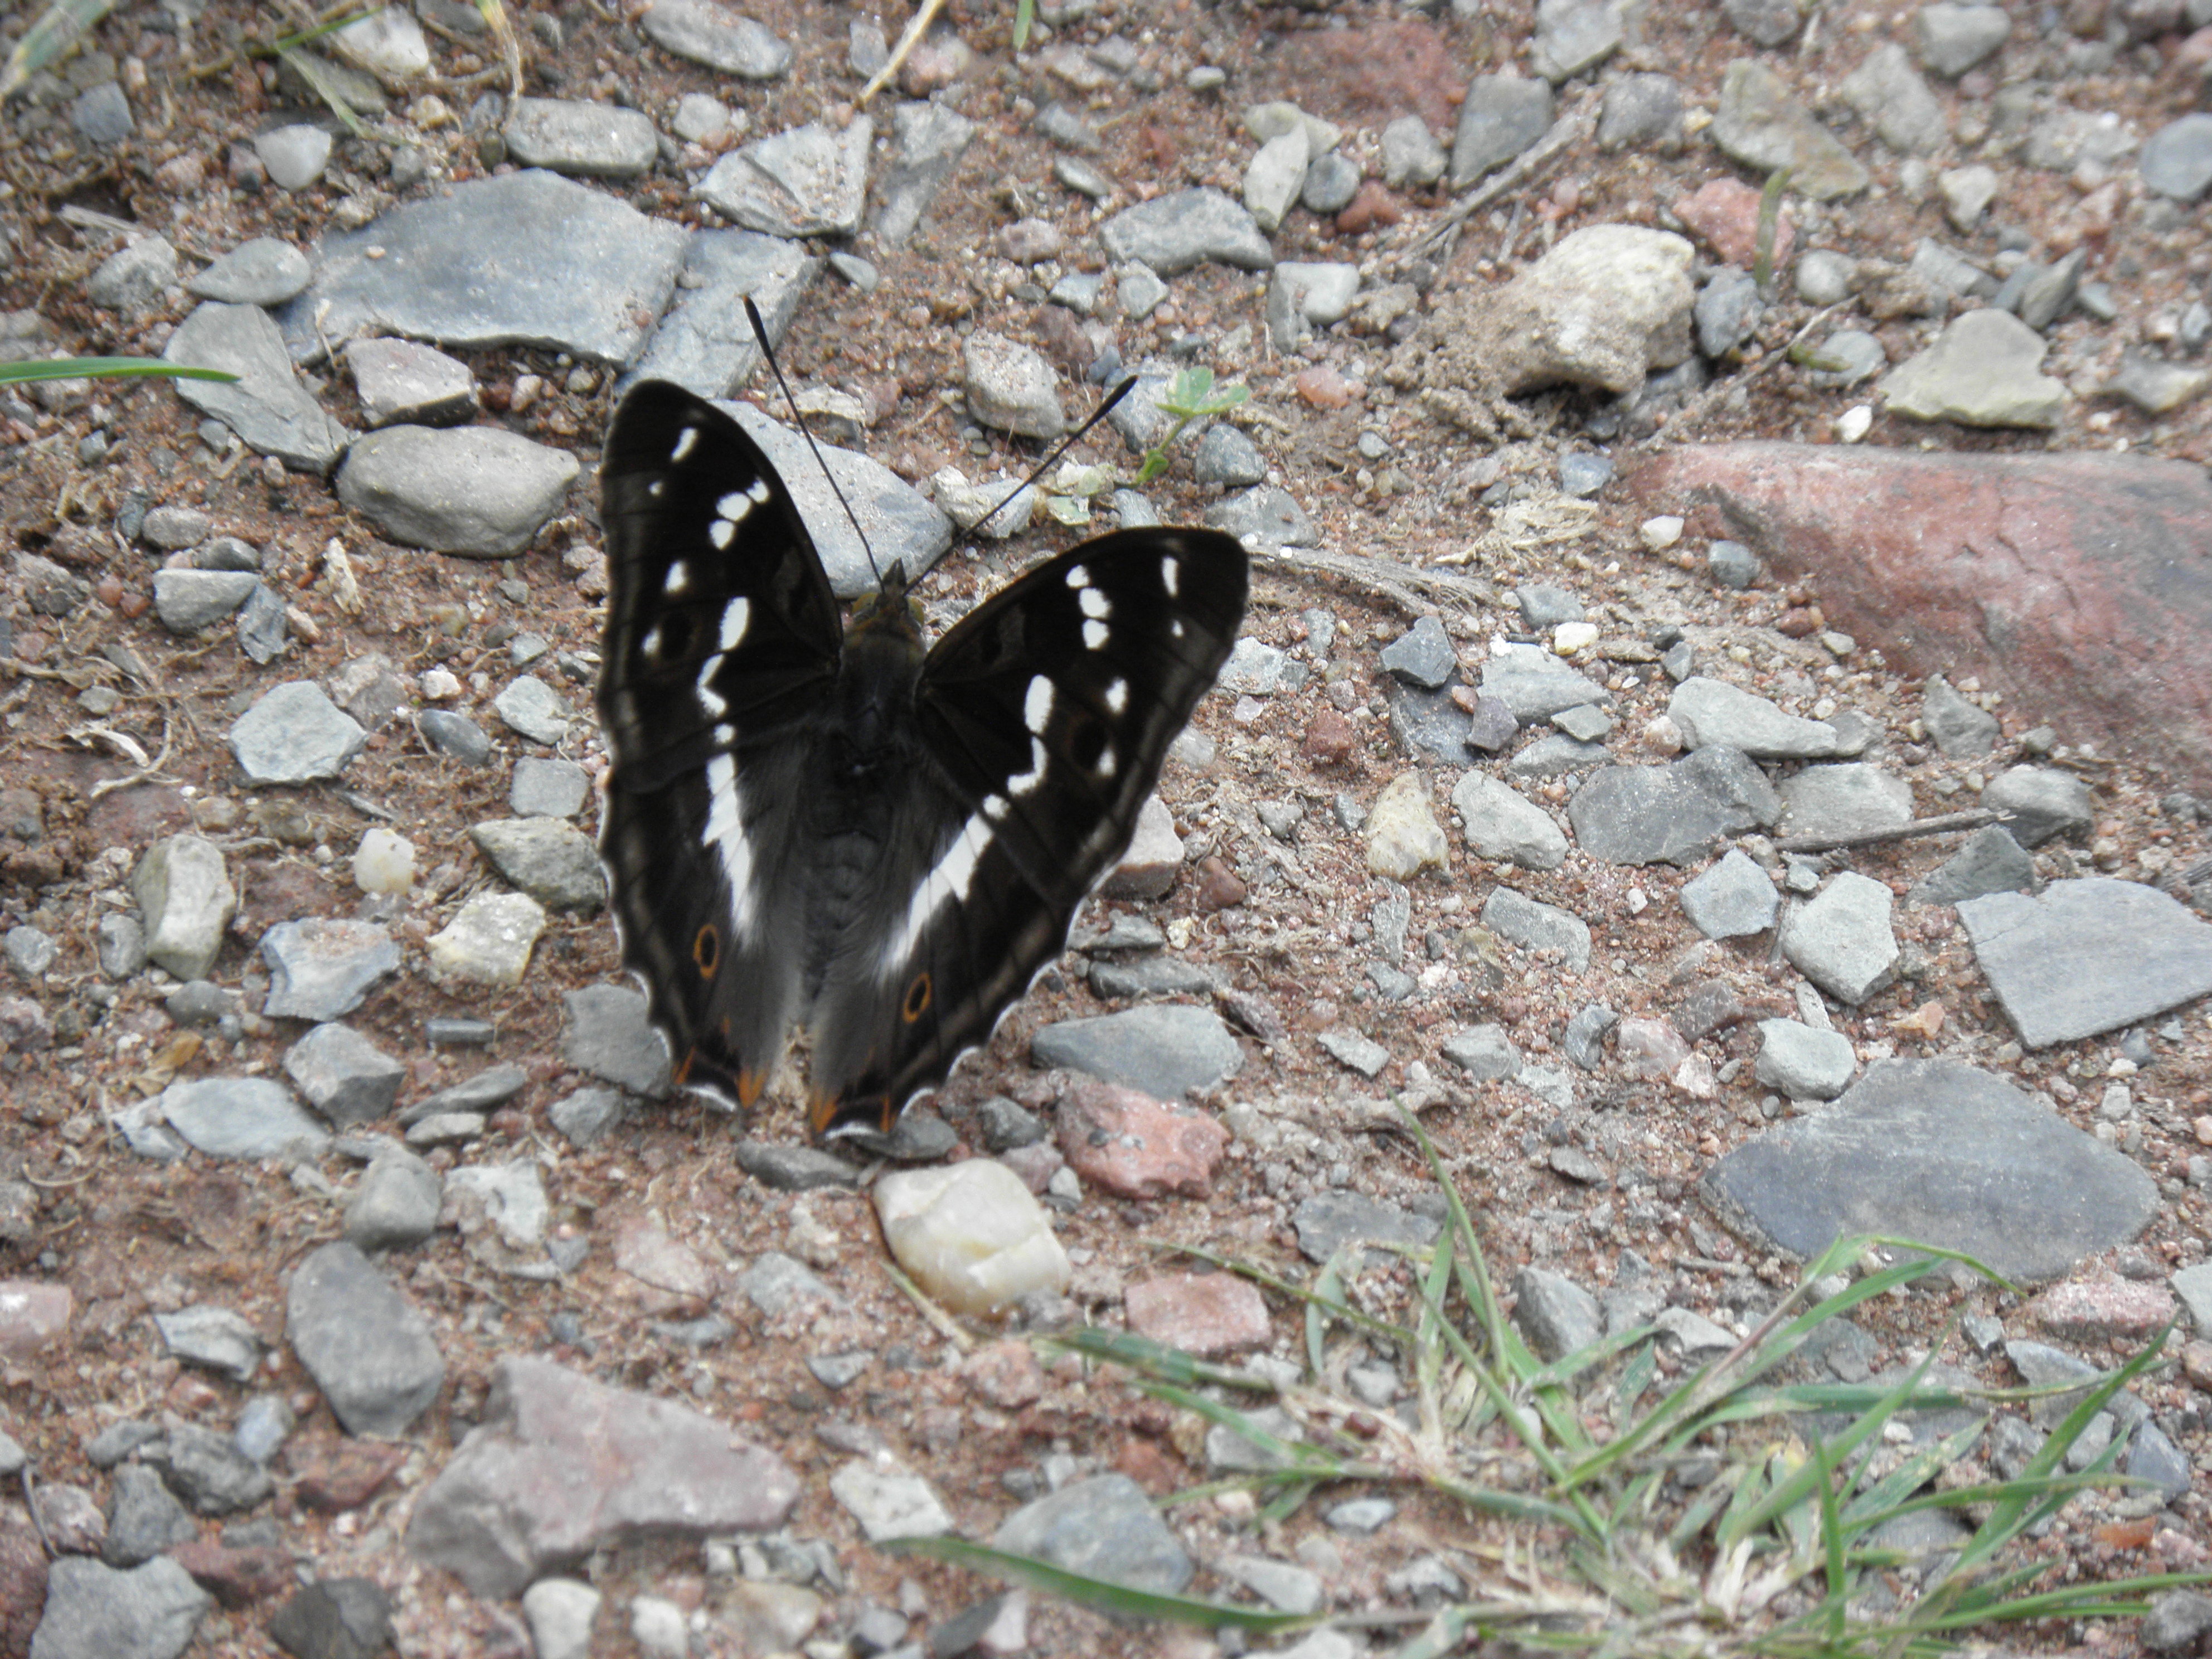 Butterfly apatura iris photo